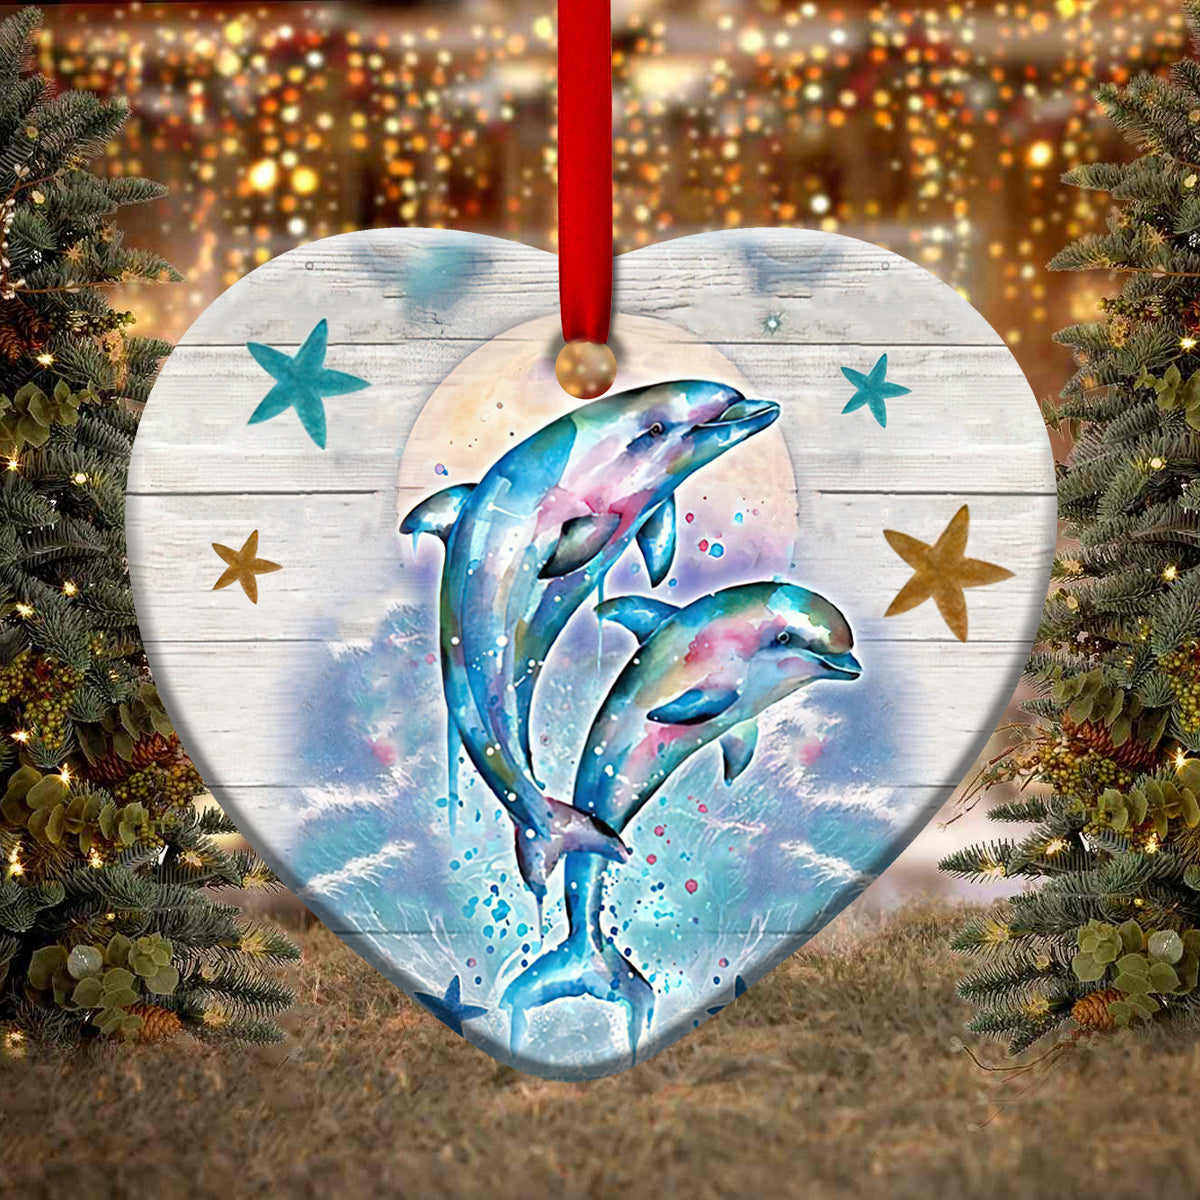 Dolphin To My Mom - Heart Ornament - Owls Matrix LTD